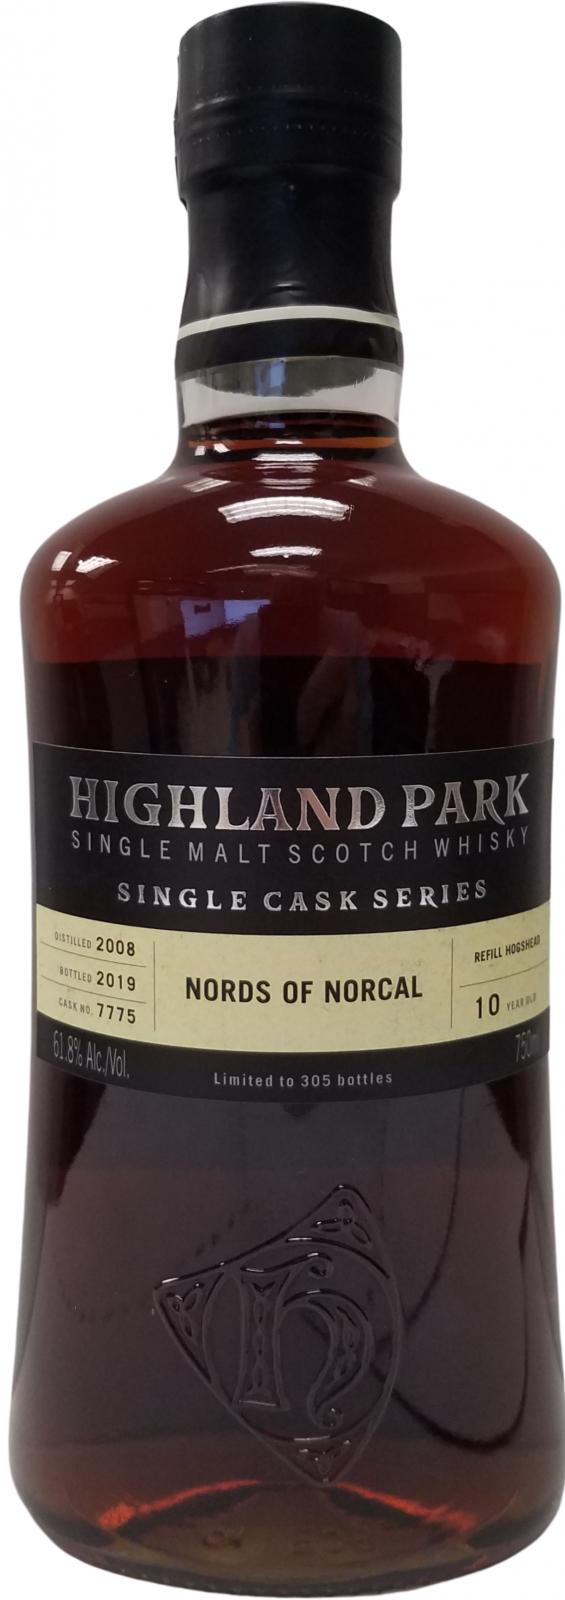 Highland Park 2008 Single Cask Series Refill Hogshead #7775 61.8% 750ml